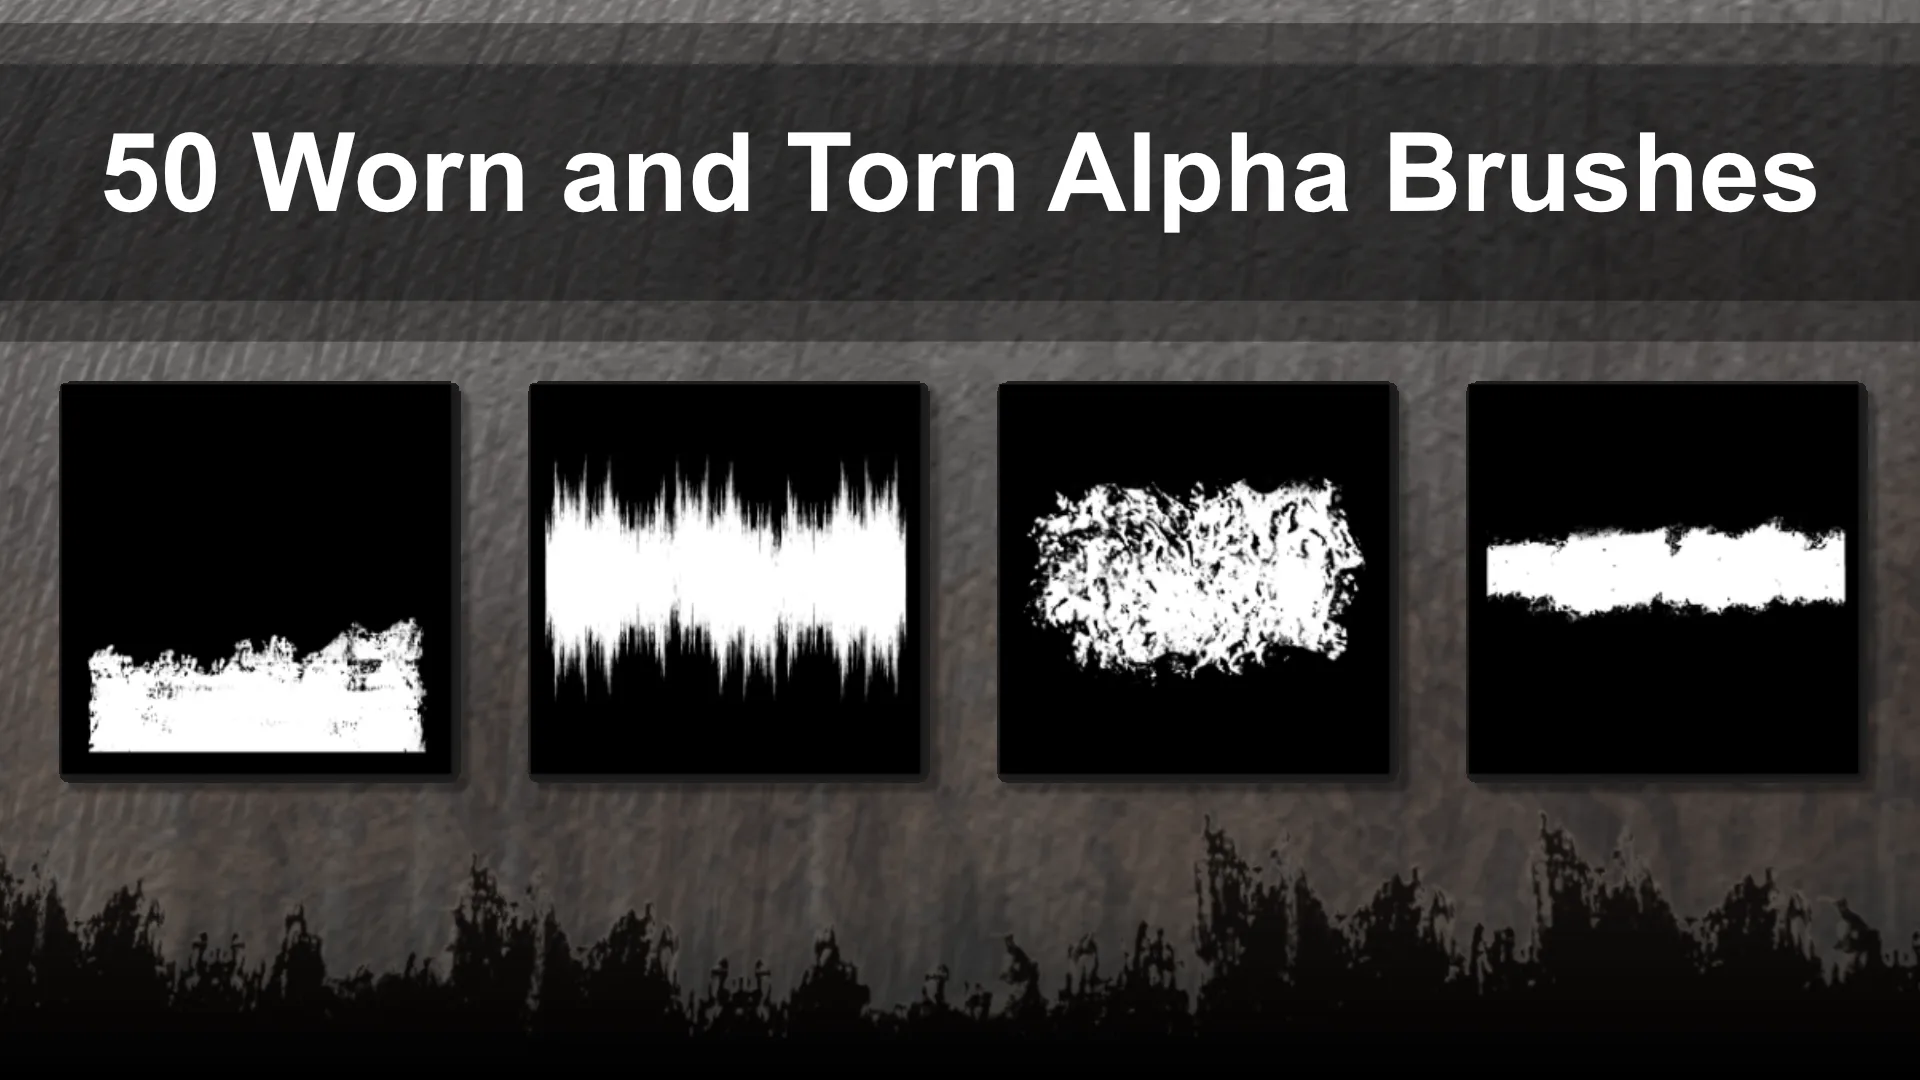 50 Alpha Brushes - Worn & Torn Edges